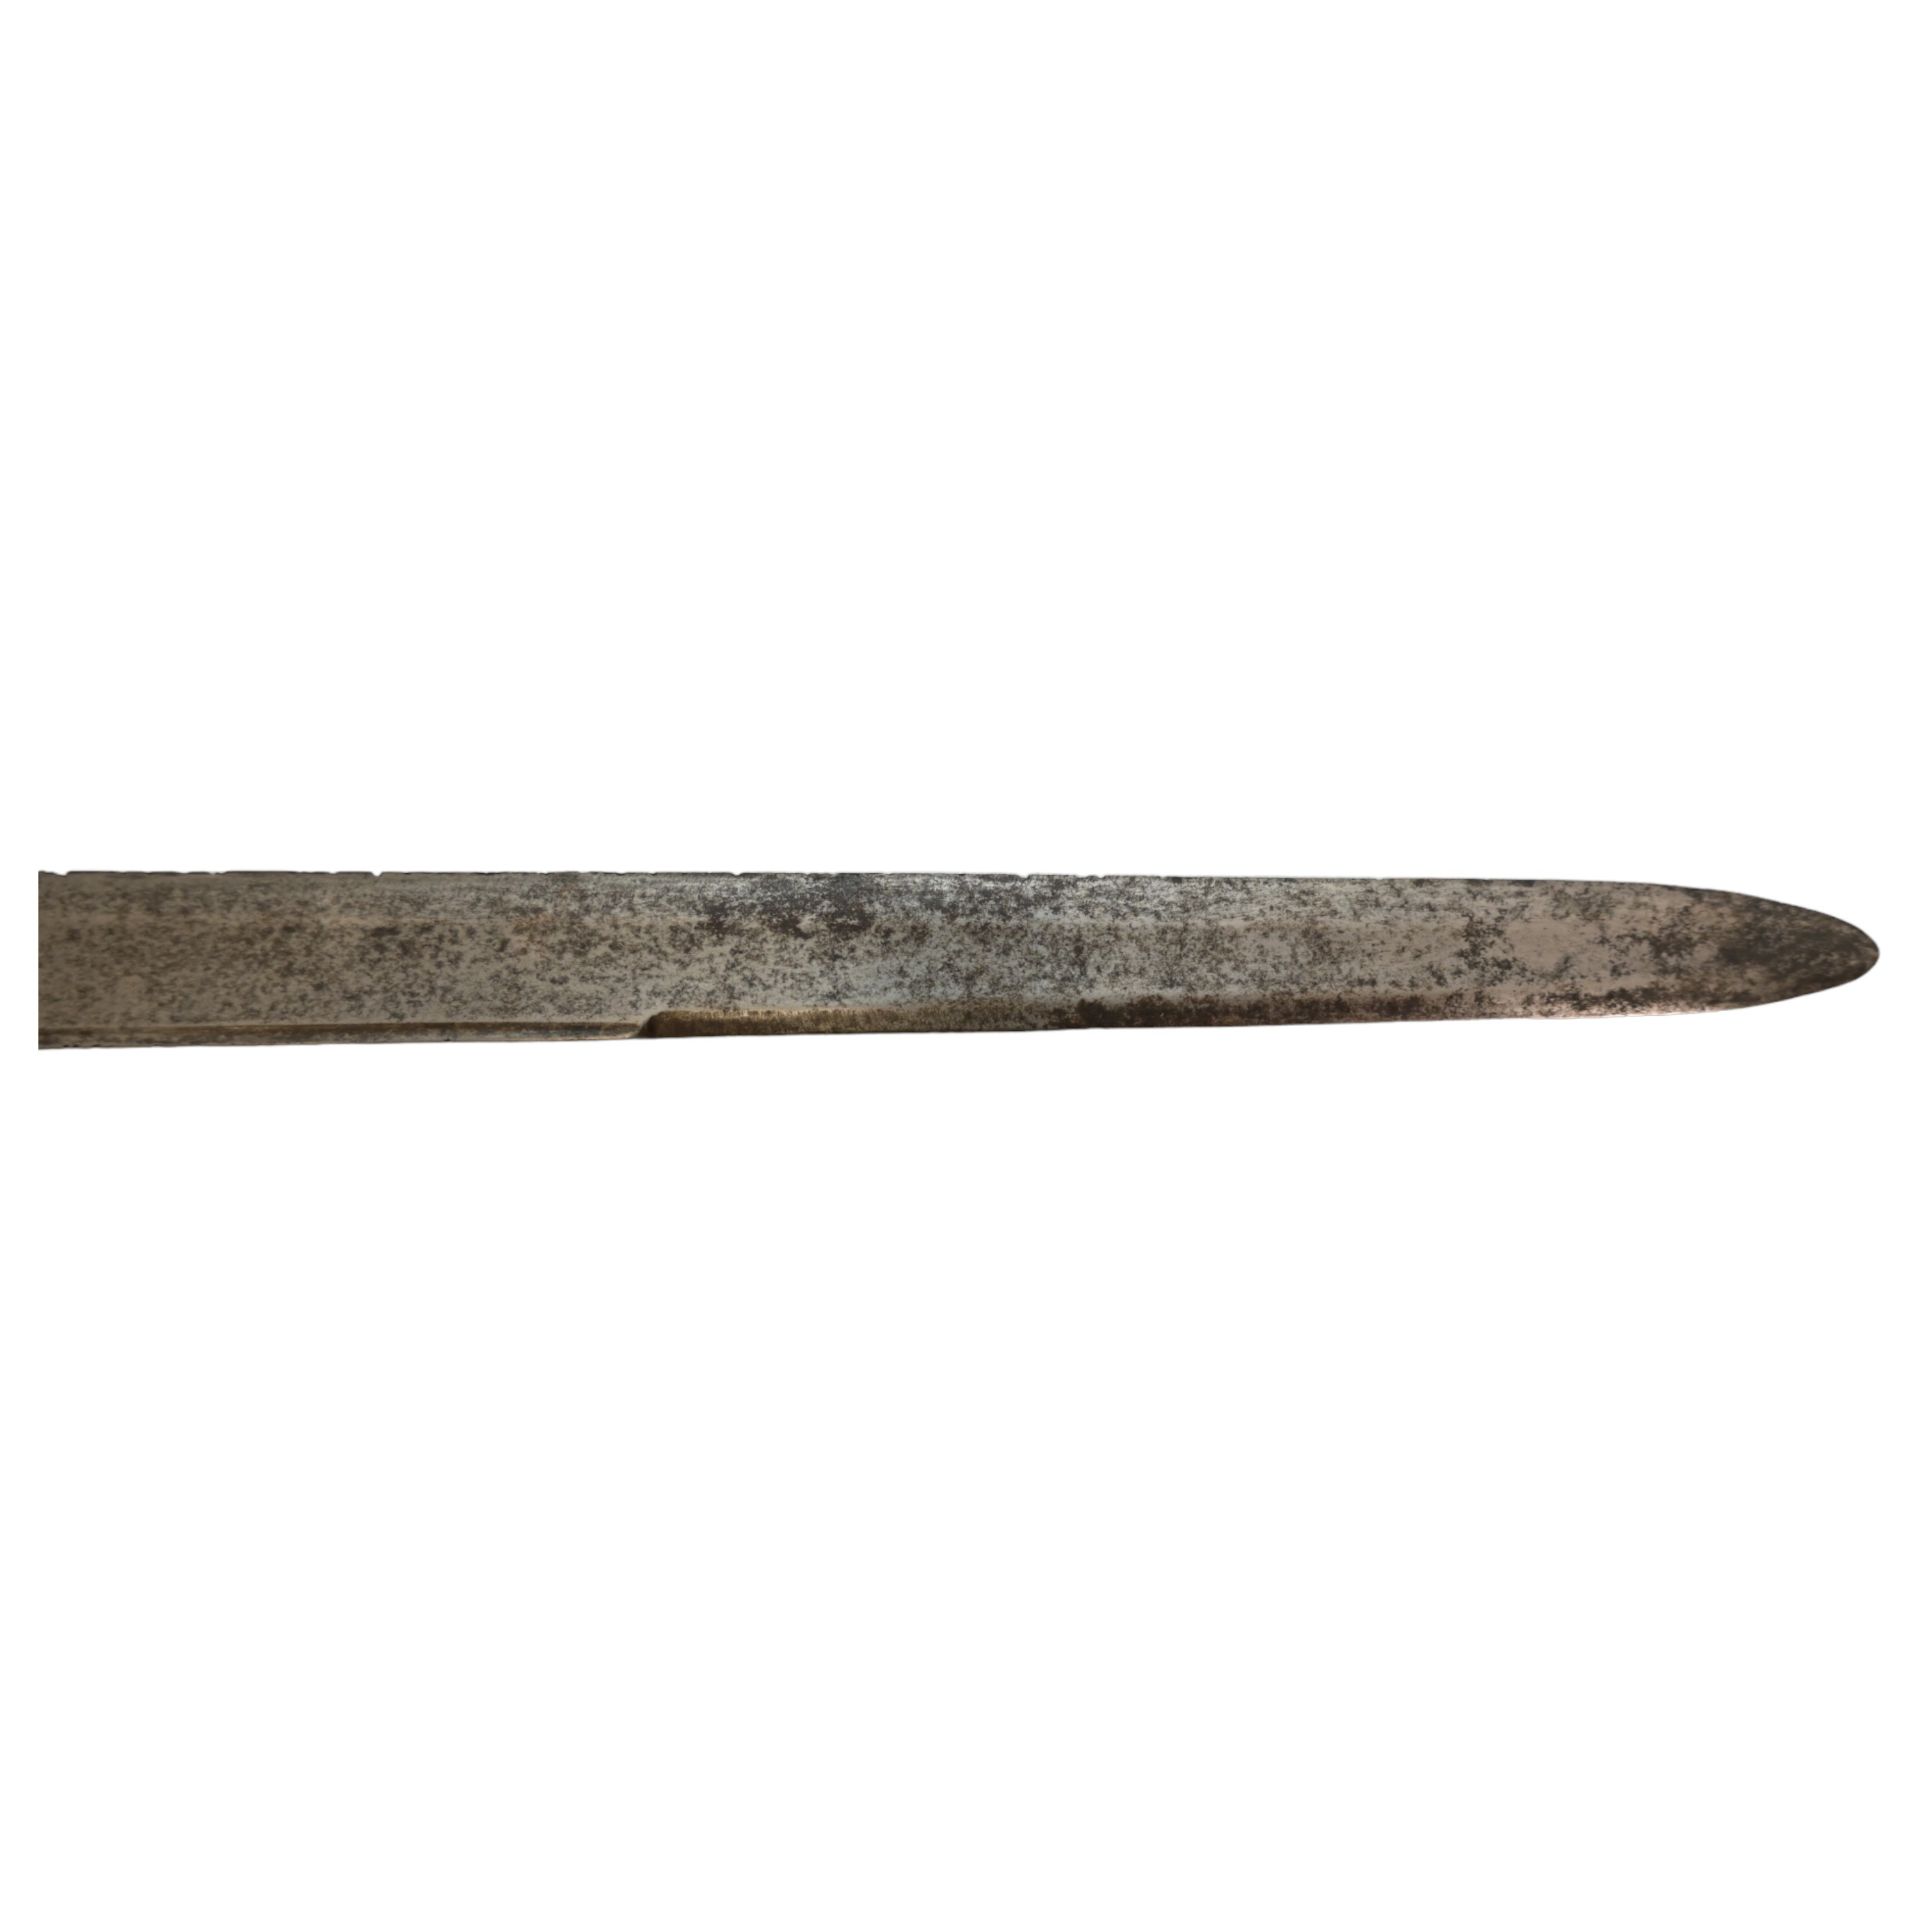 Rare Hunting Sword, 18th Century, Germany. - Image 10 of 12